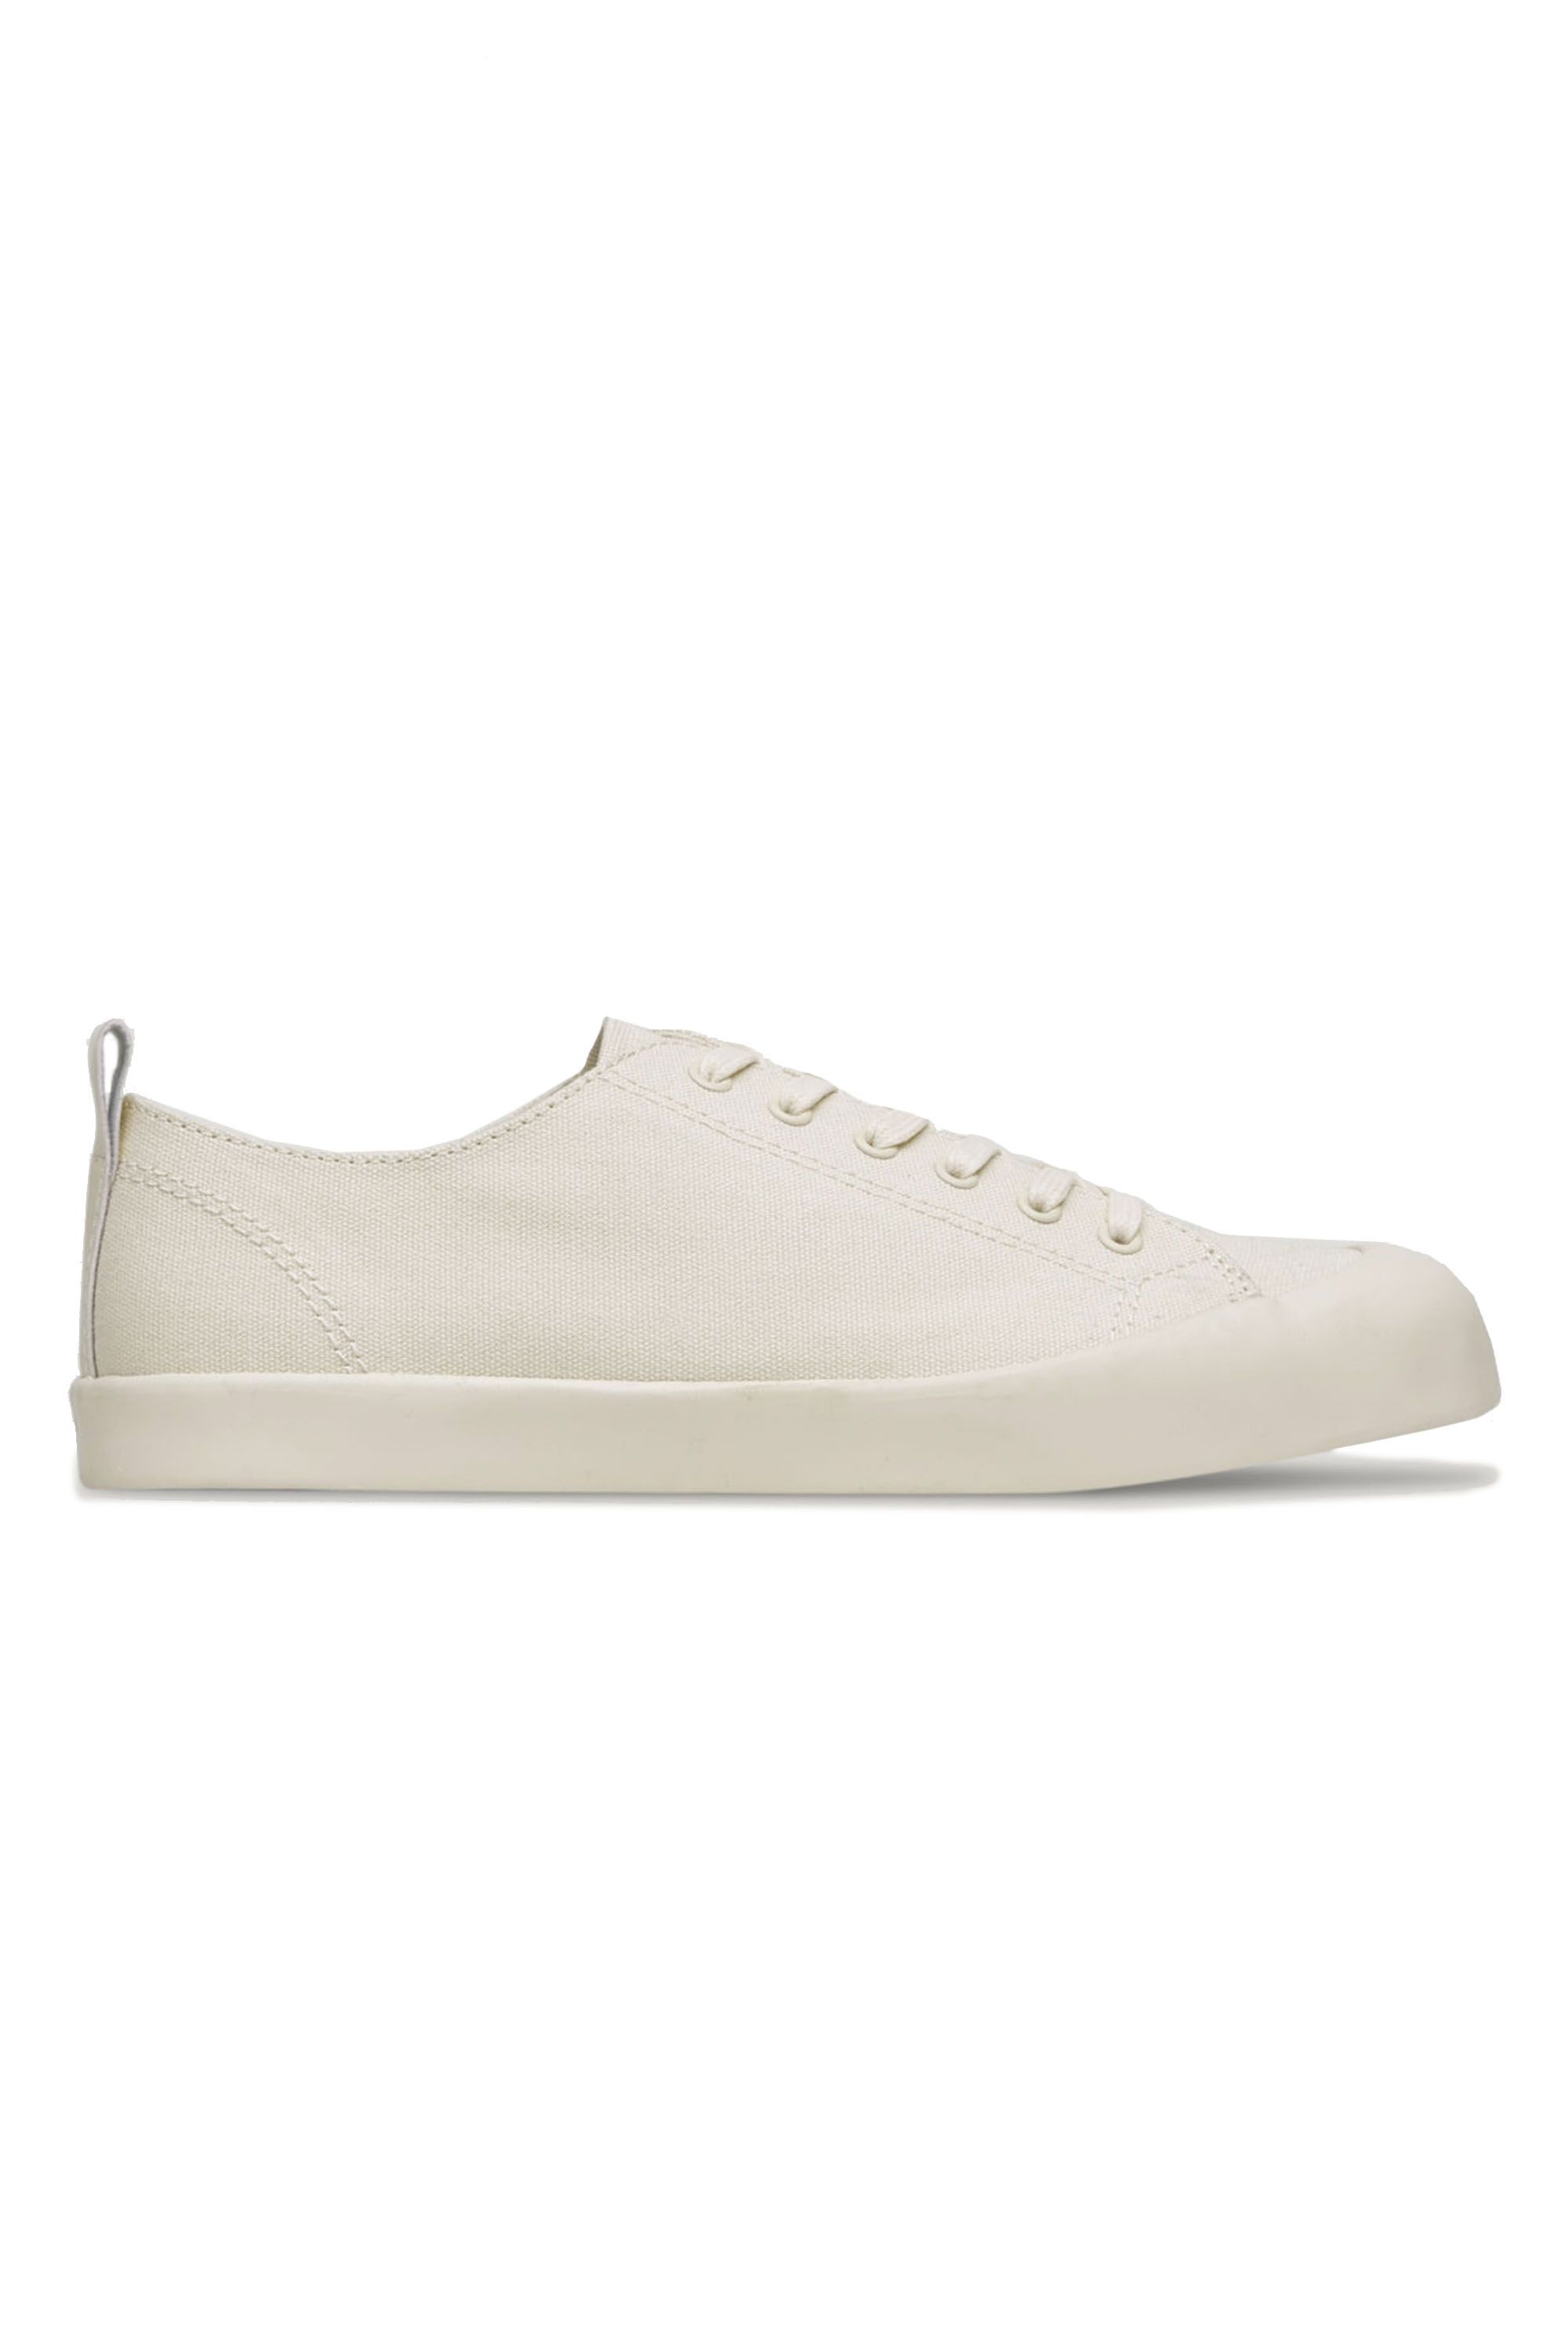 Balenciaga Triple S Sneakers White Running Shoes for Men